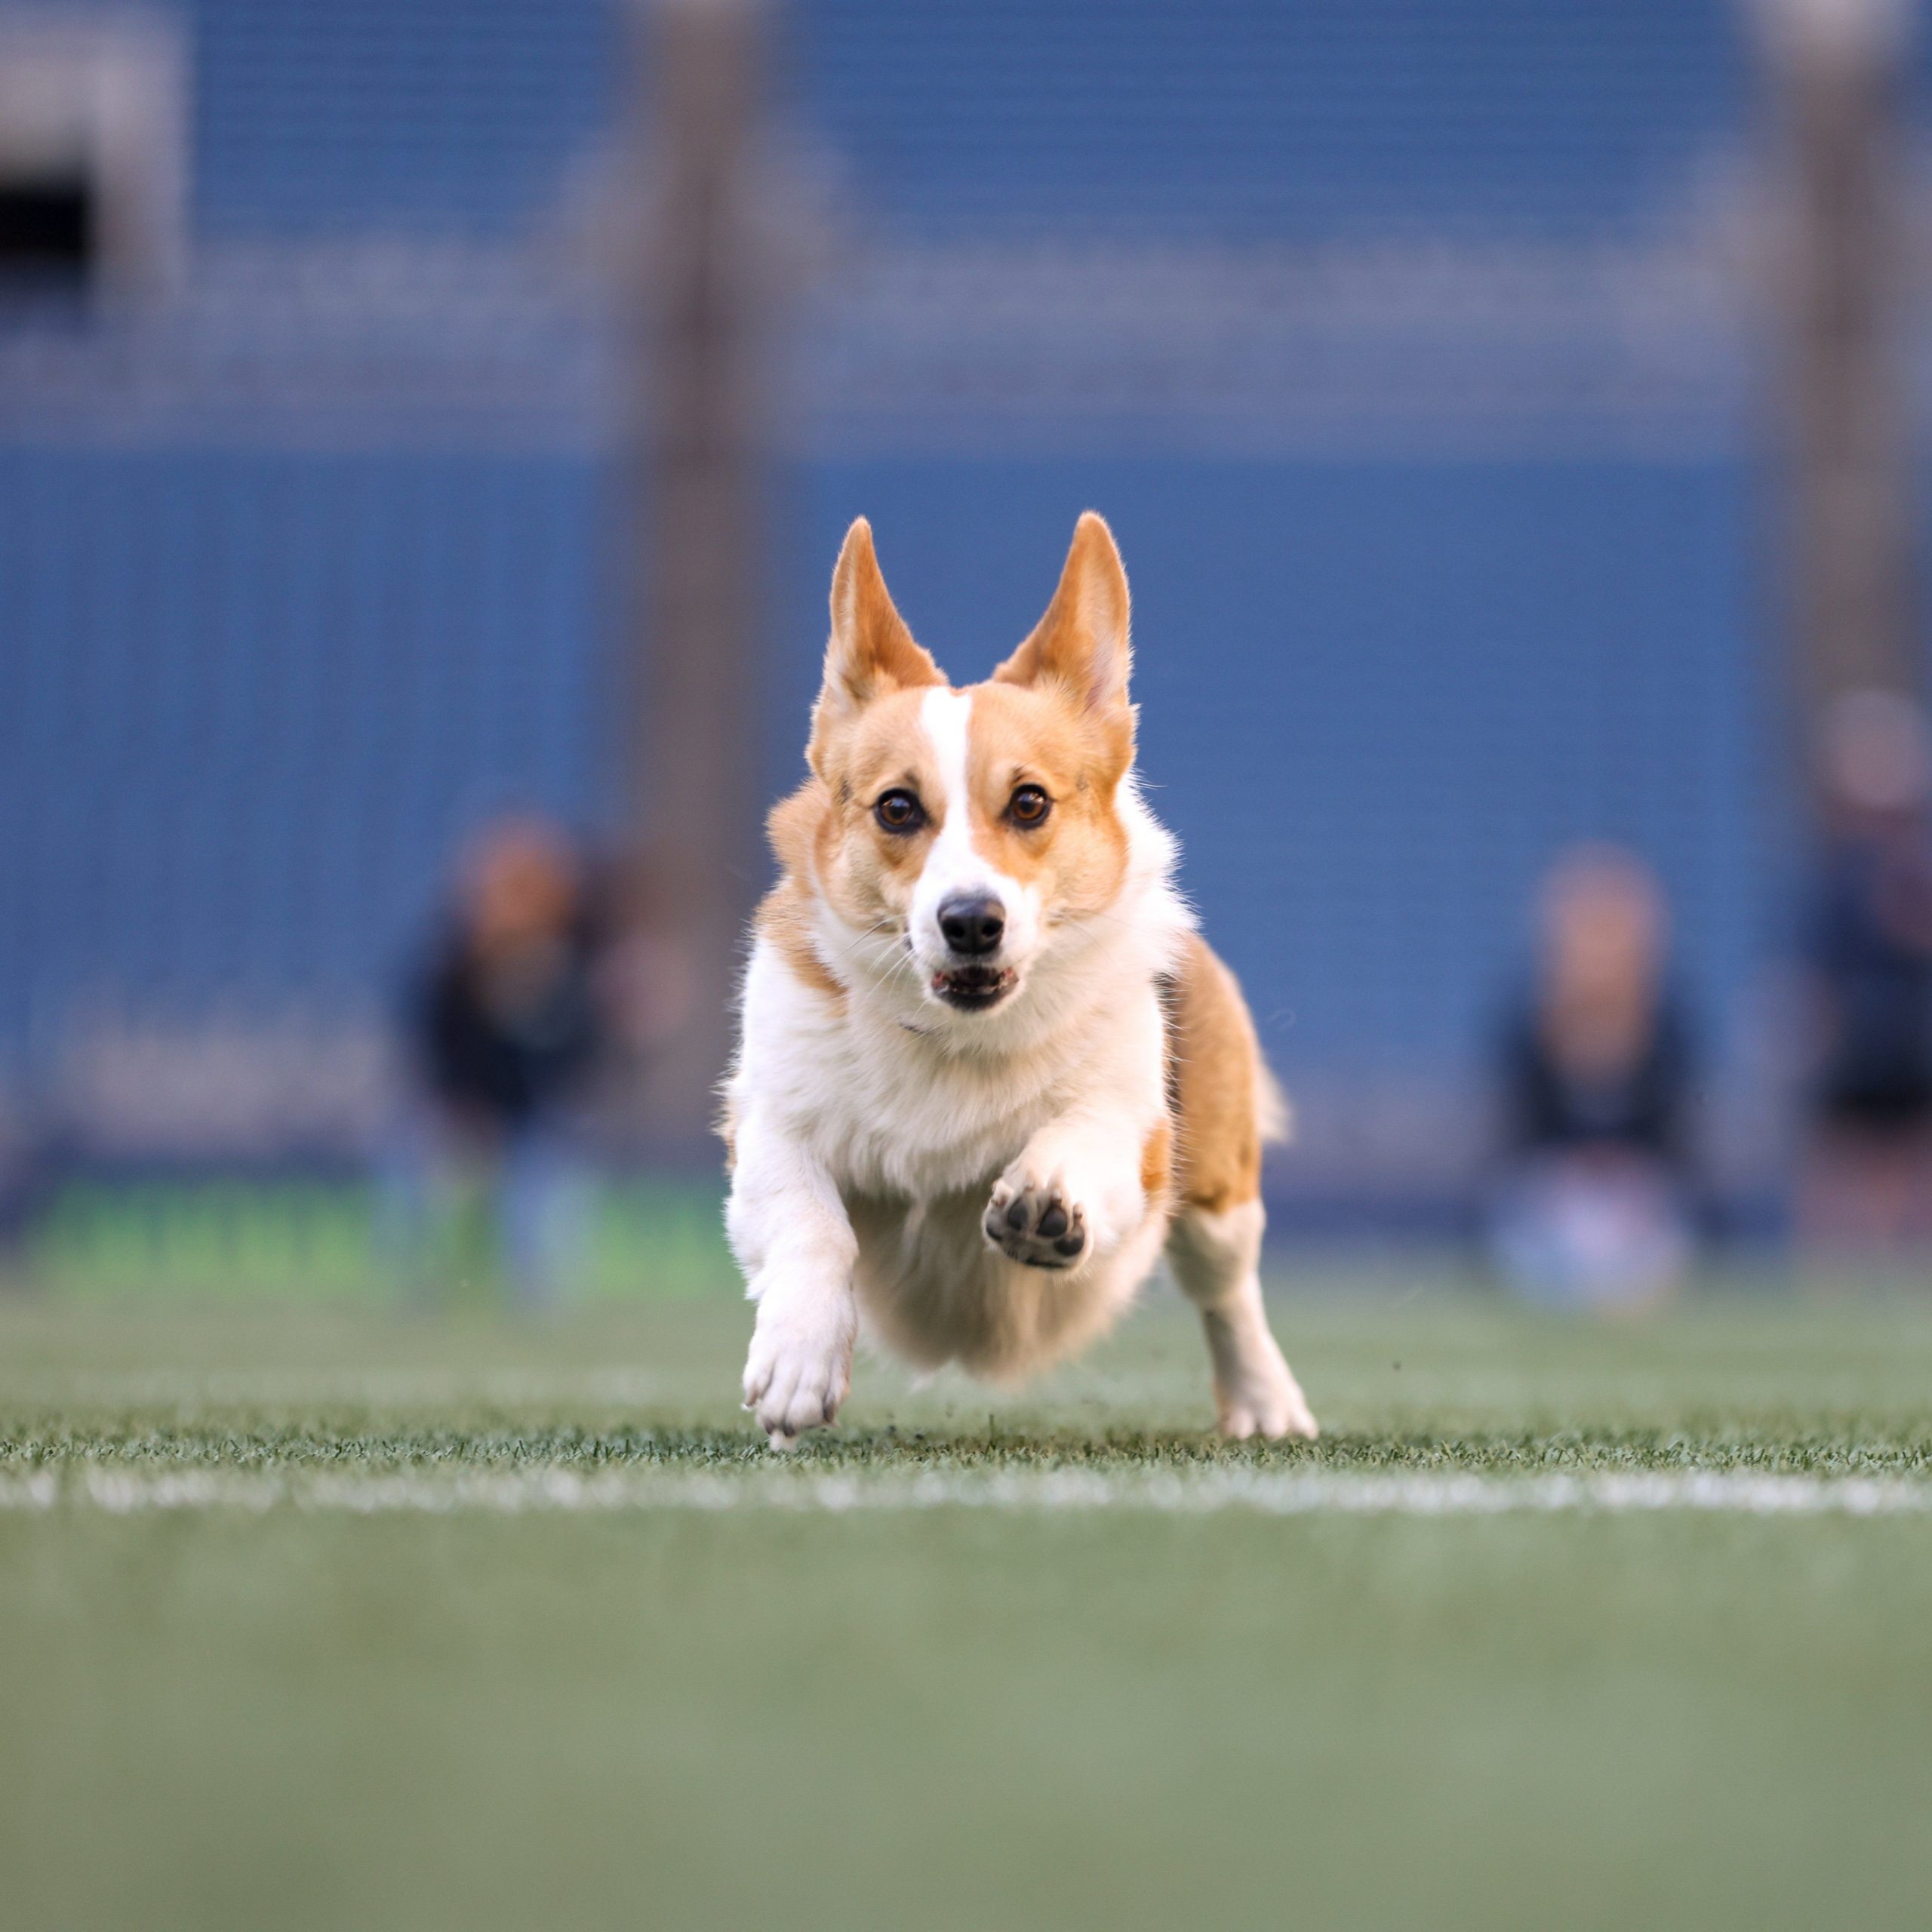 Corgi on the loose: Dog runs around stadium at Seahawks vs Falcons halftime